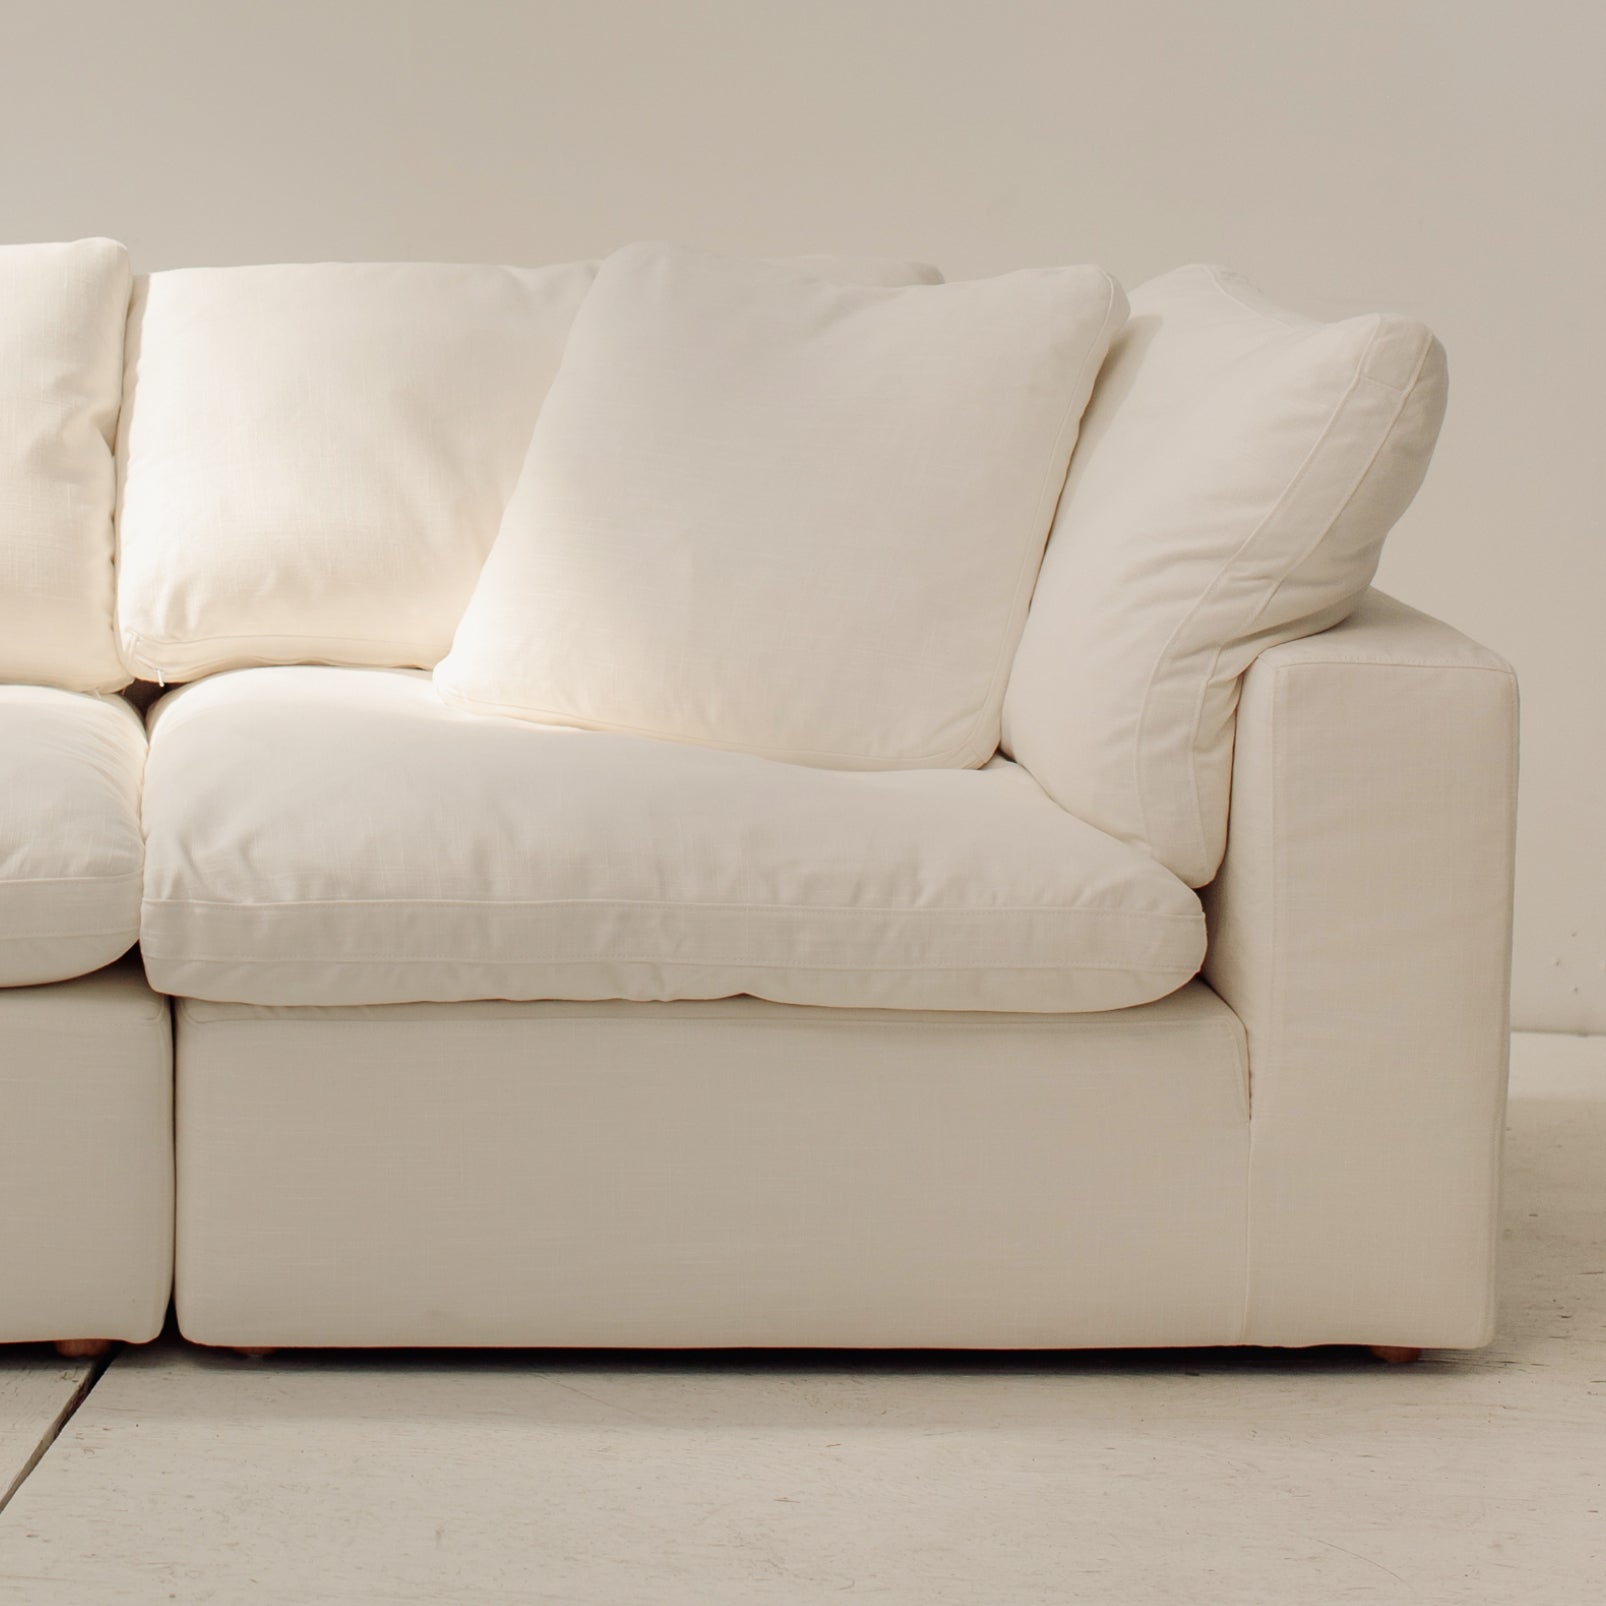 Movie Night™ Corner Chair, Large, Cream Linen (Left or Right) - Image 10